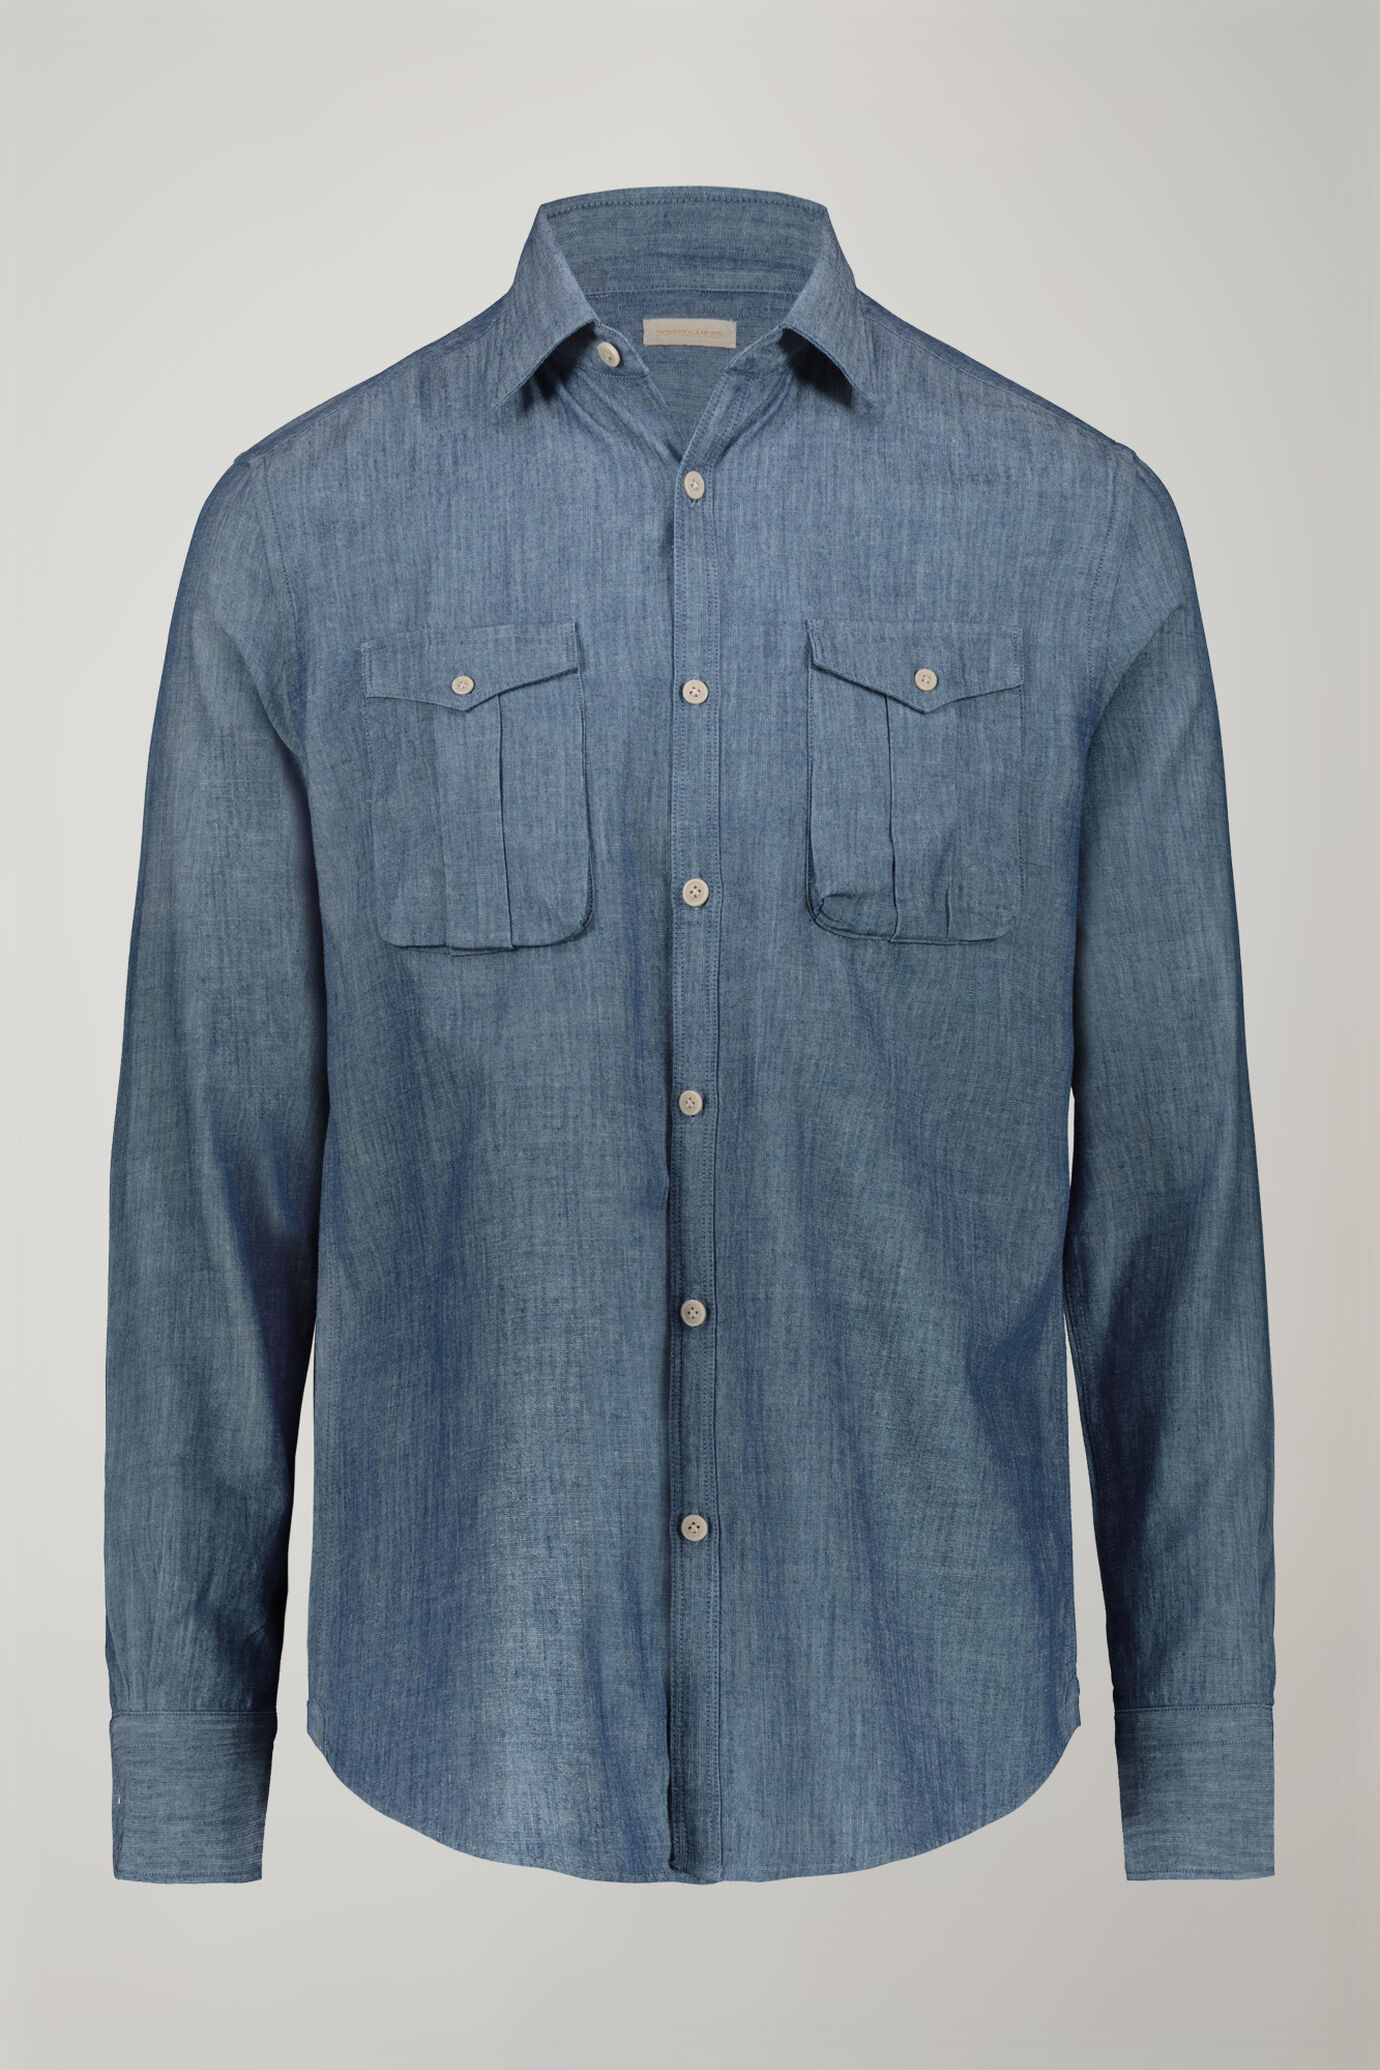 Men’s casual shirt classic collar 100% cotton denim fabric comfort fit image number 5